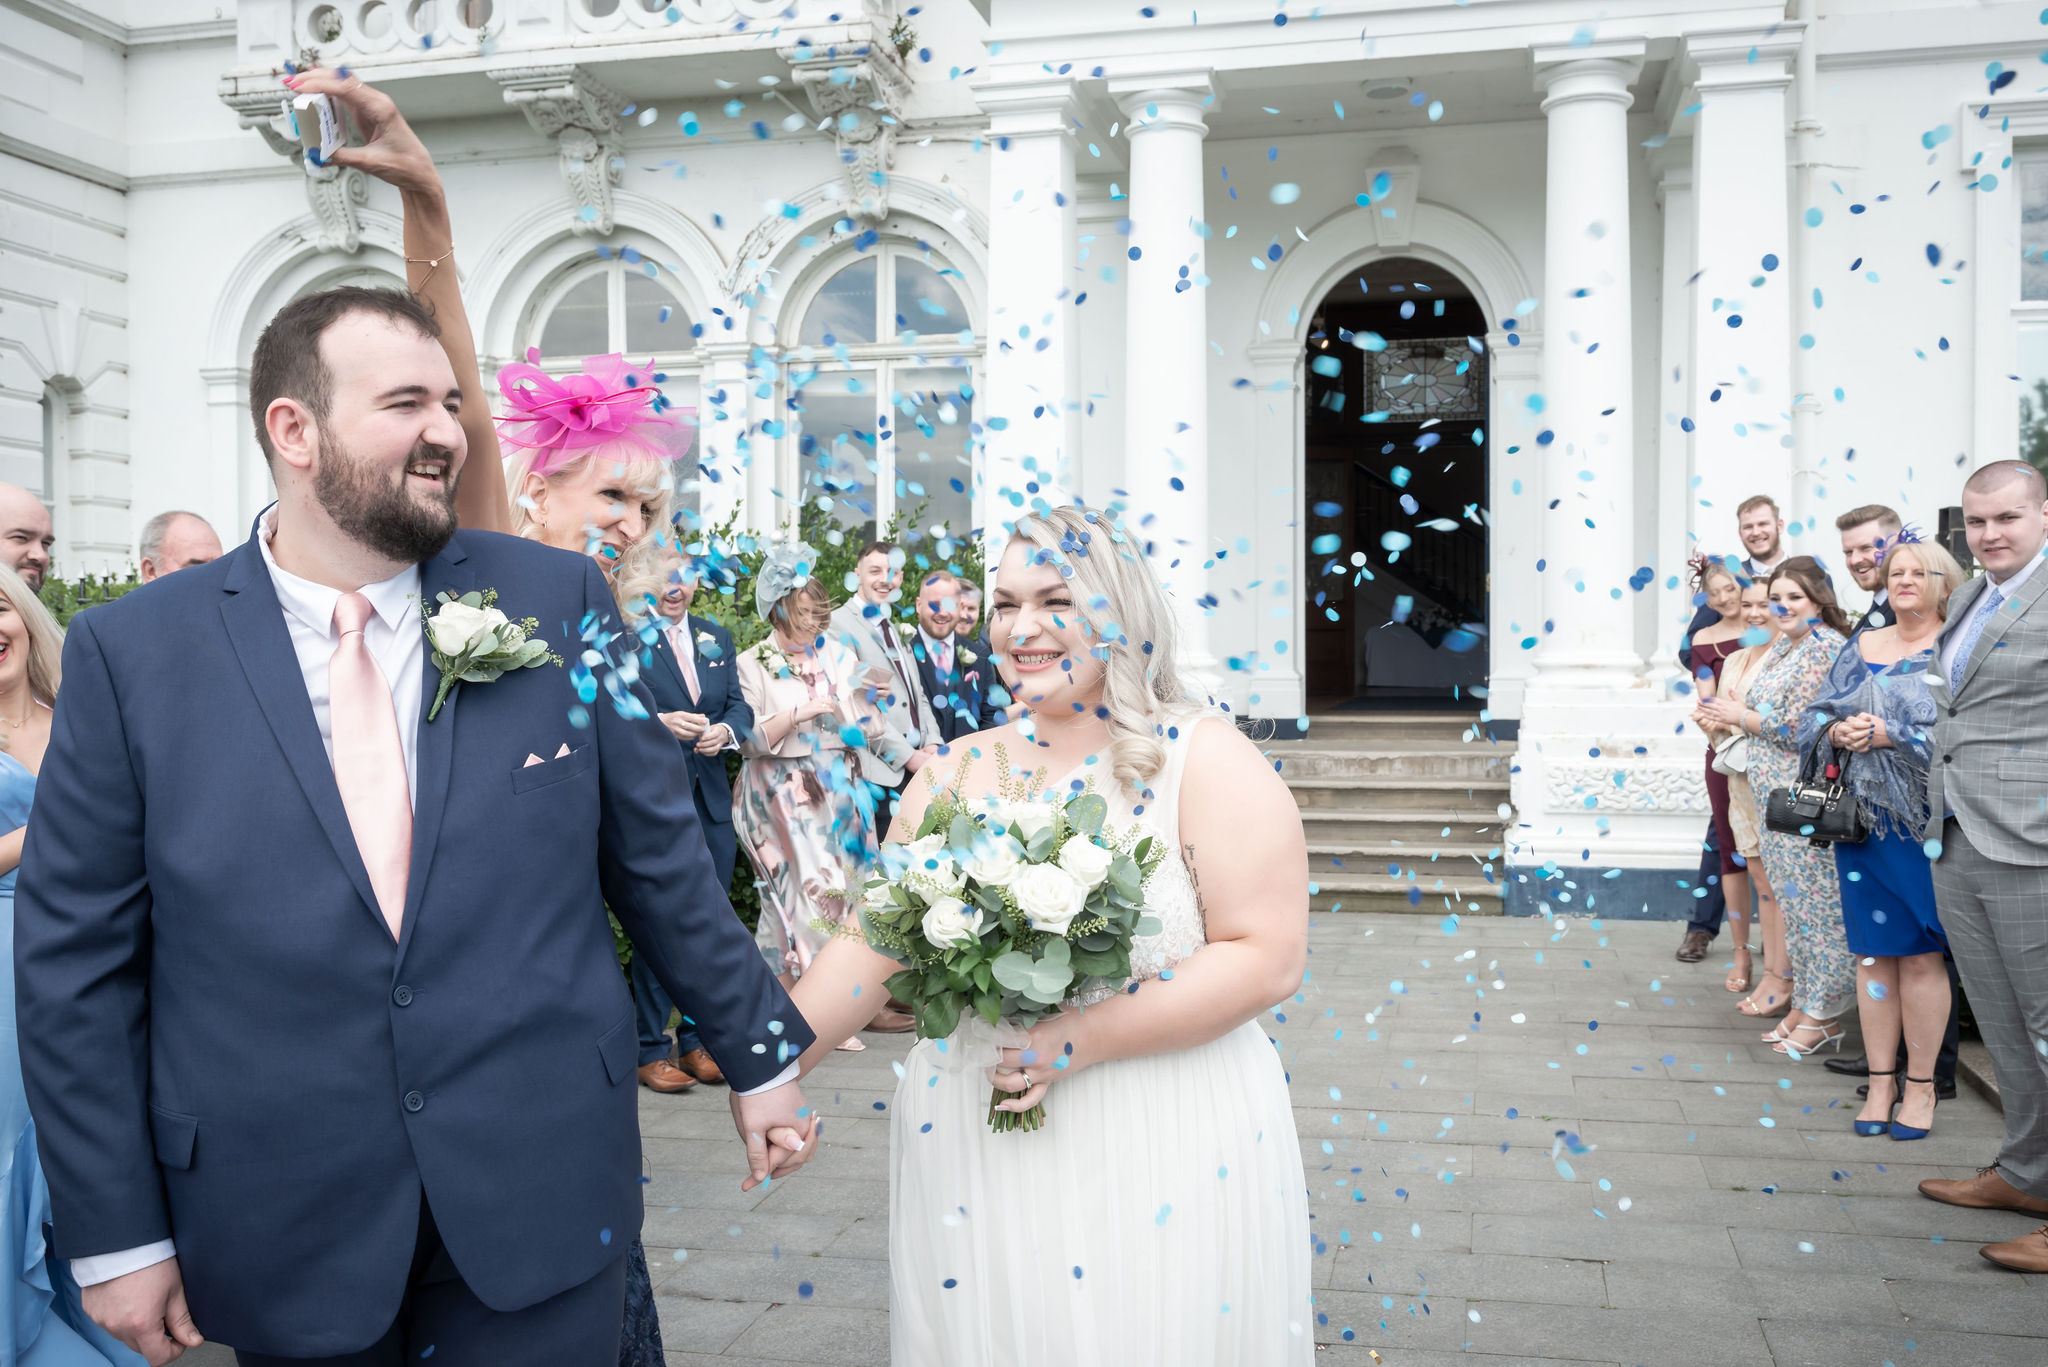 Picture perfect! Confetti rains down on beaming bride & groom exiting Runcorn Town Hall. #JustMarried #RuncornWeddings